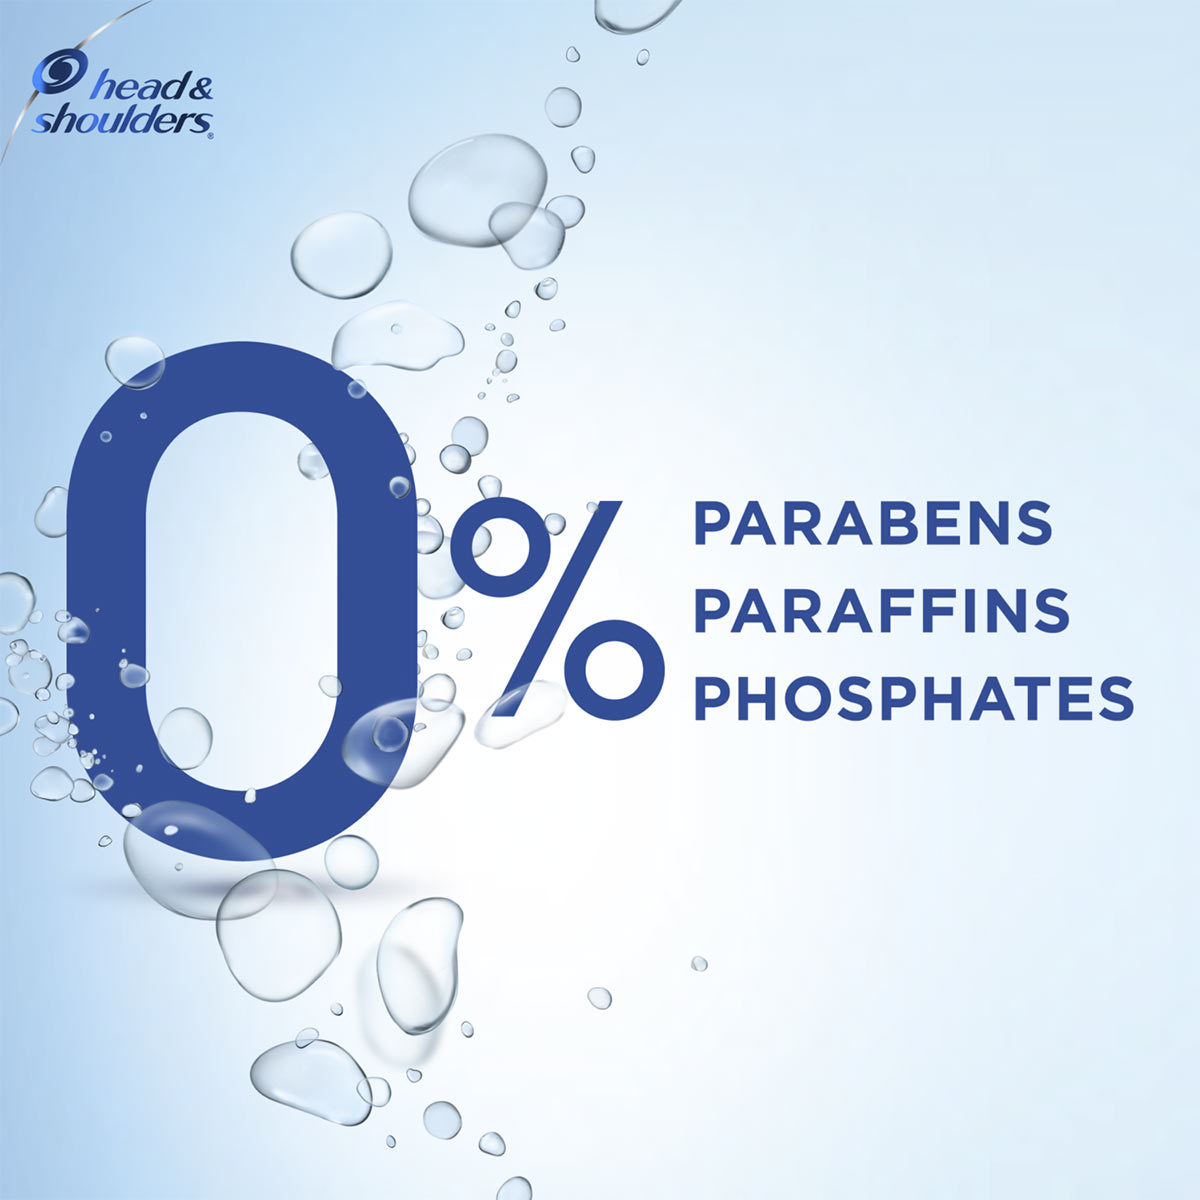 0% Parabens paraffins phosphates